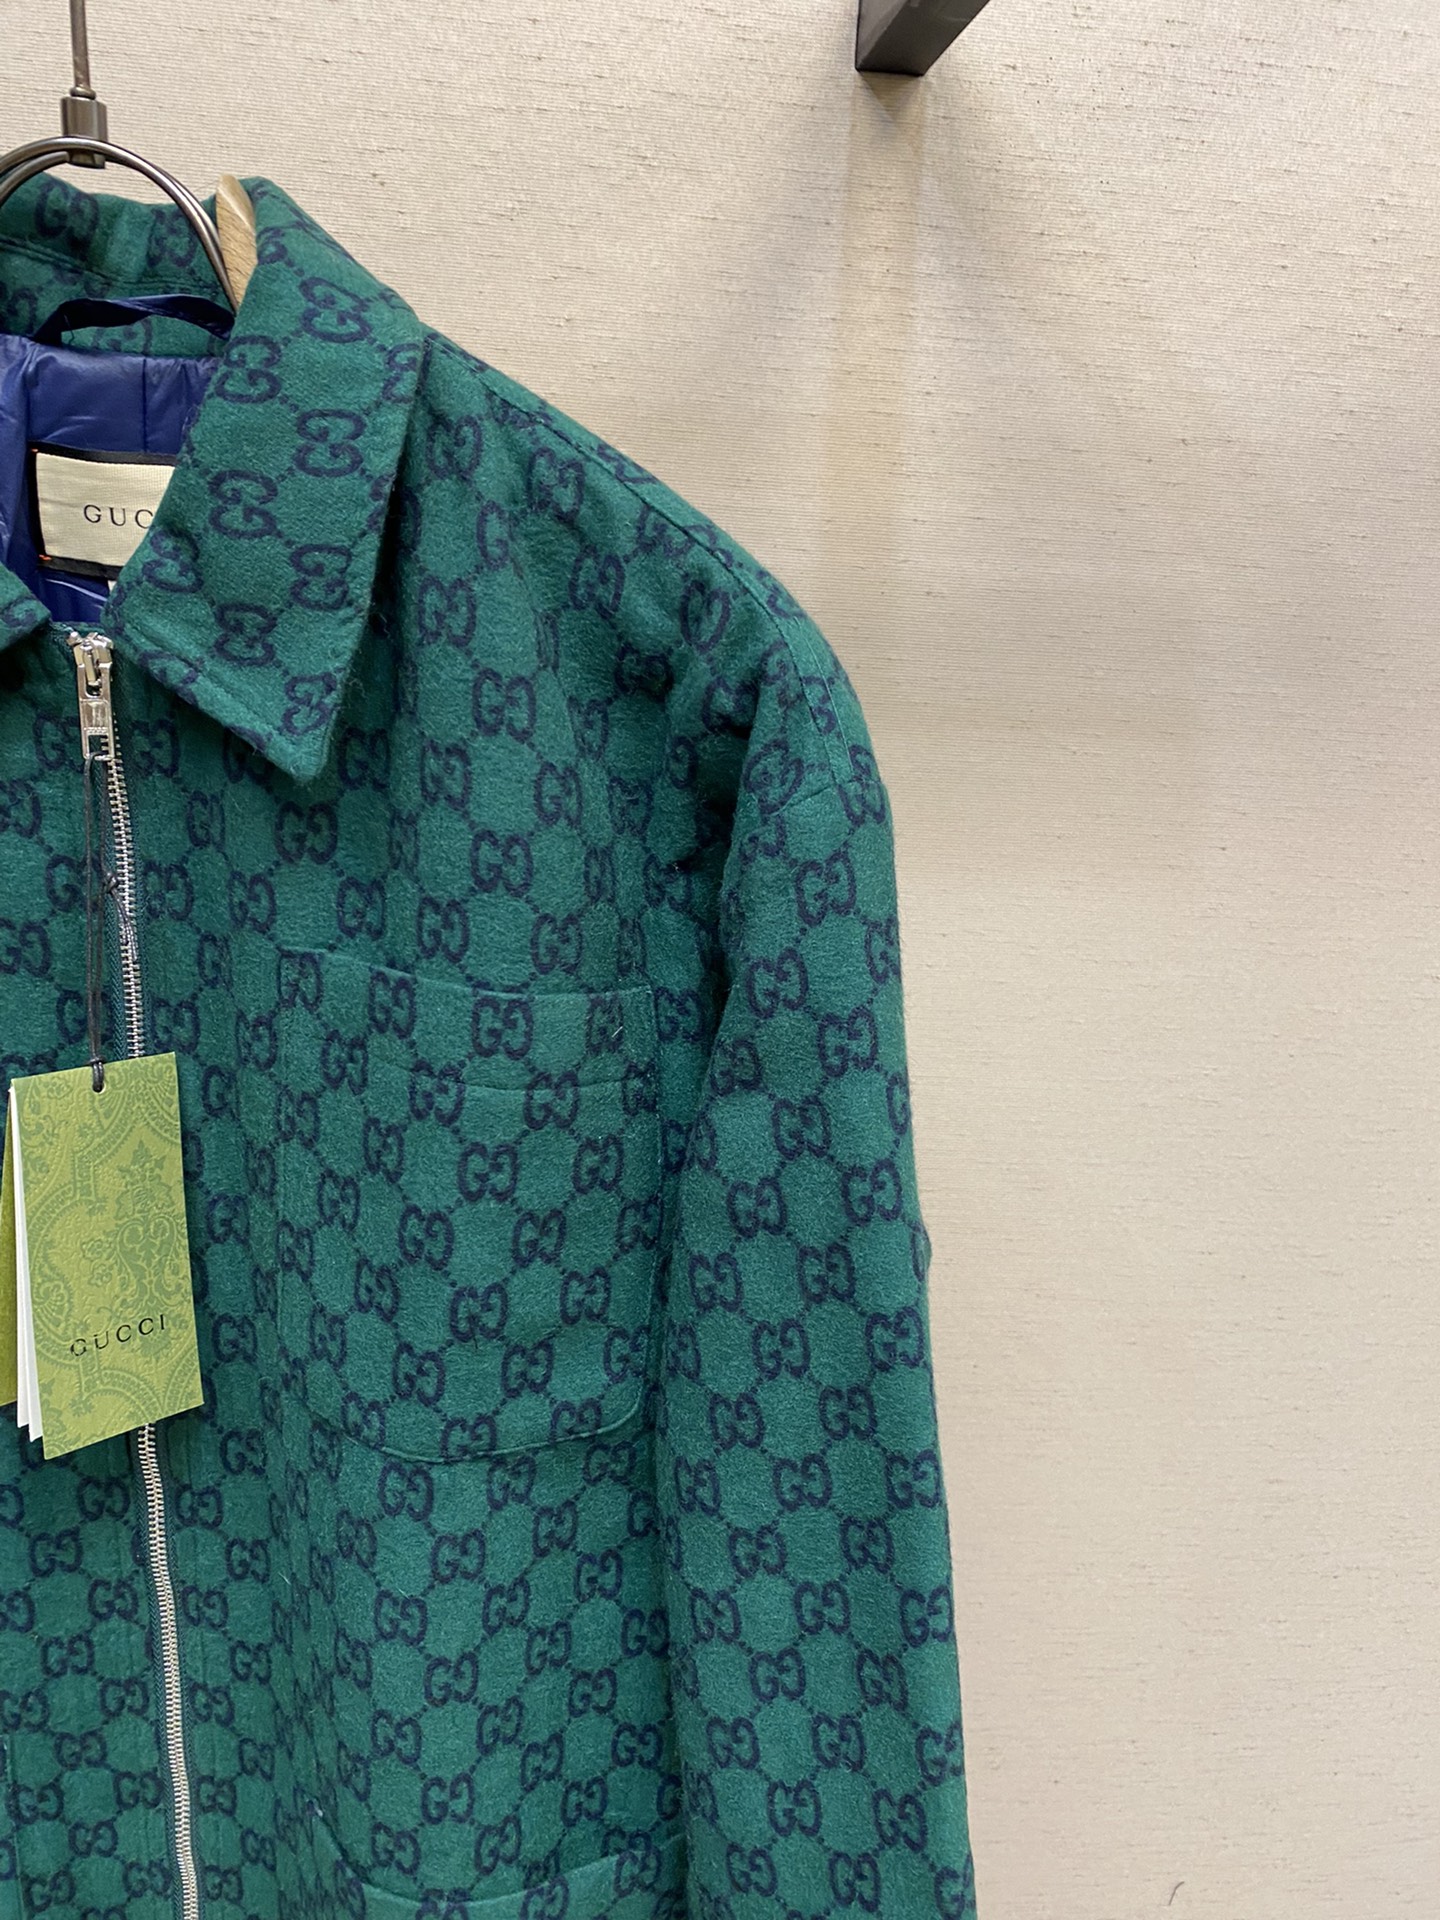 Gucci23ss新款经典GG夹克外套典藏元素组合经焕新演绎为隽永单品添注雅致格调与时尚气息这款拉链夹克